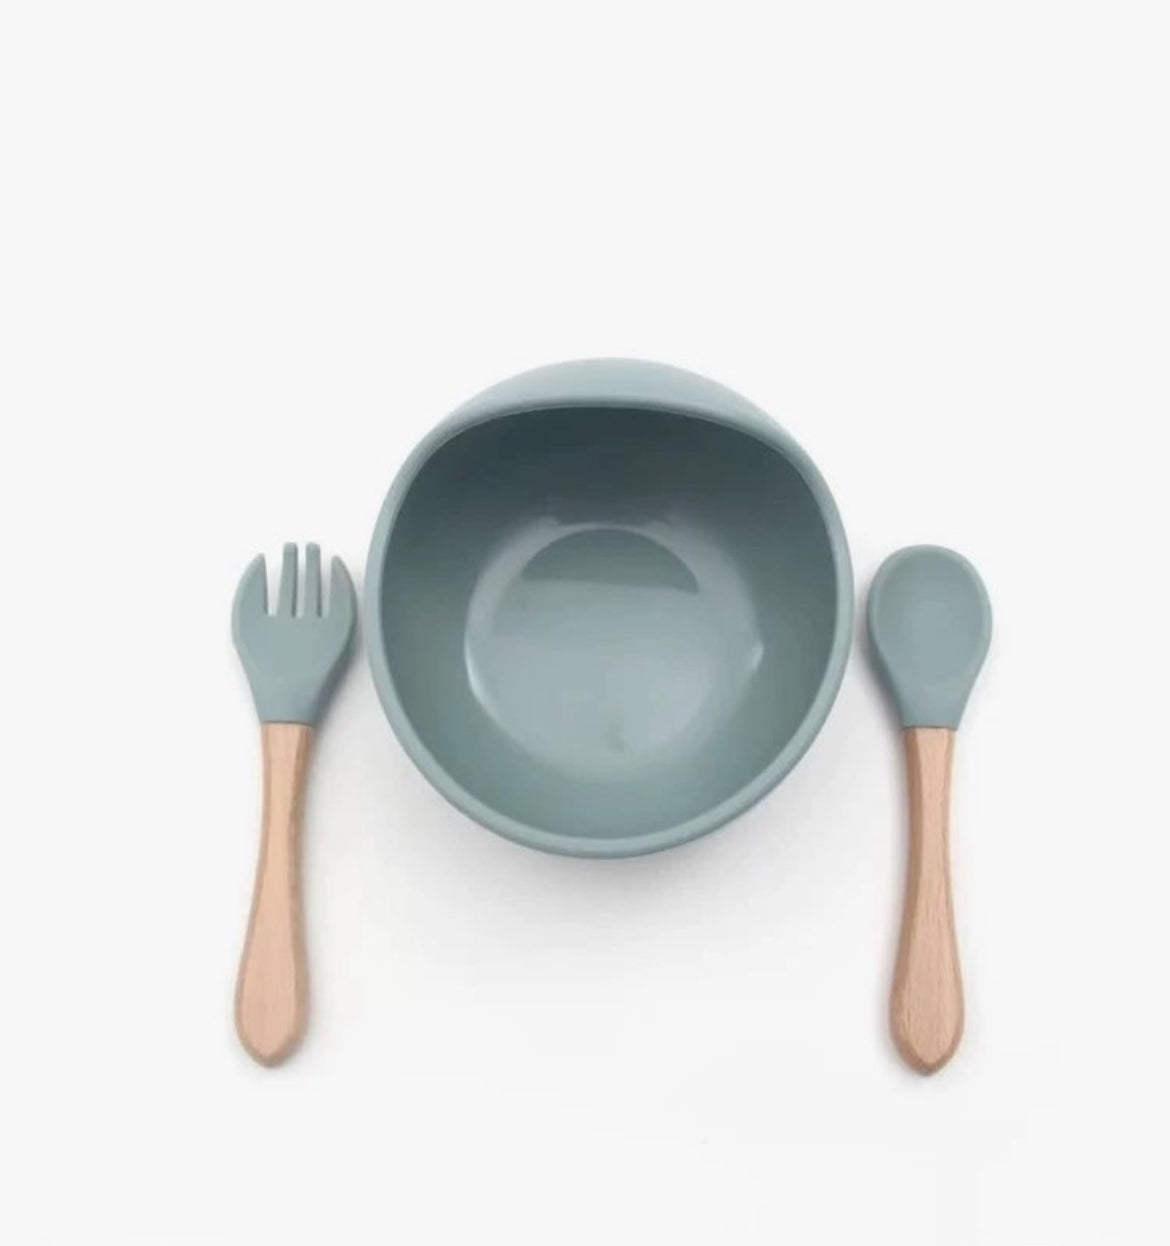 Silicone bowl, spoon & fork set